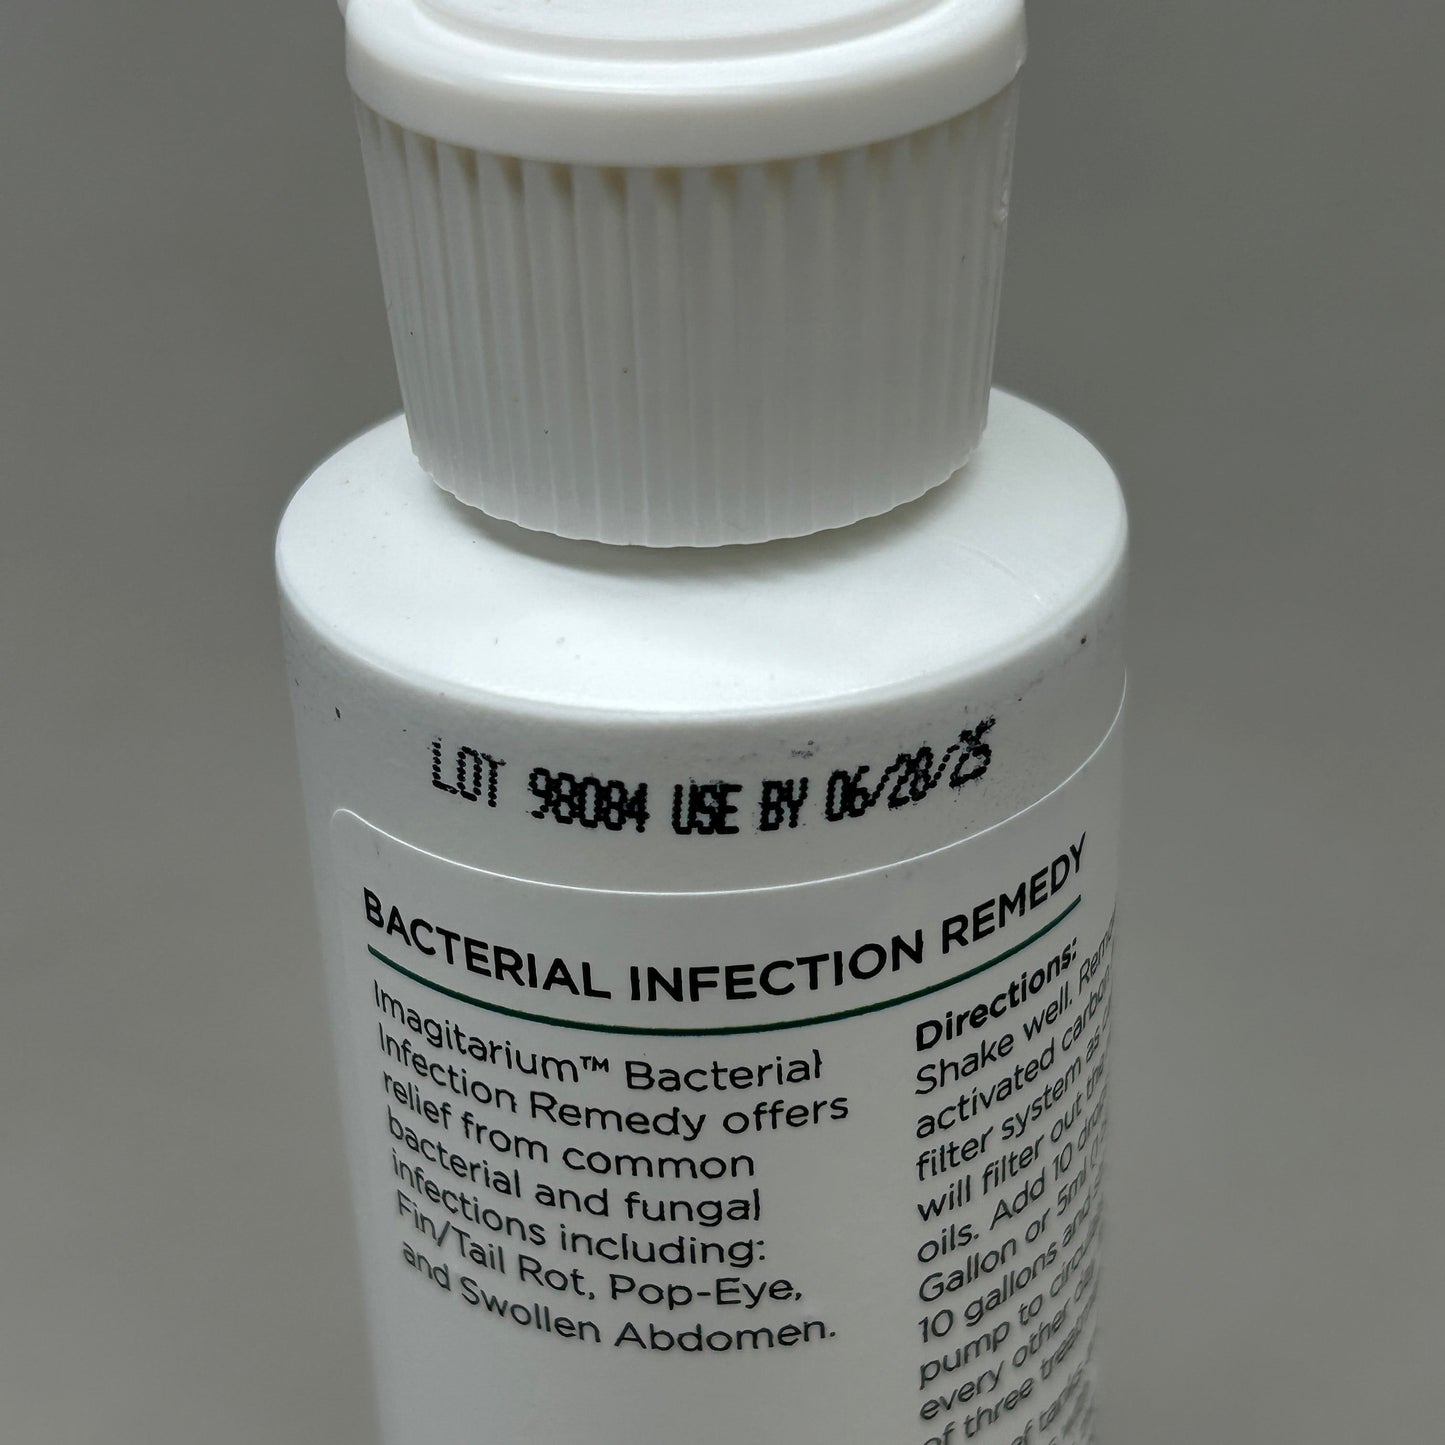 PETCO IMAGITARIUM Bacterial Infection Remedy Herbal / Non-Toxic 4 fl oz 6/25 (New)